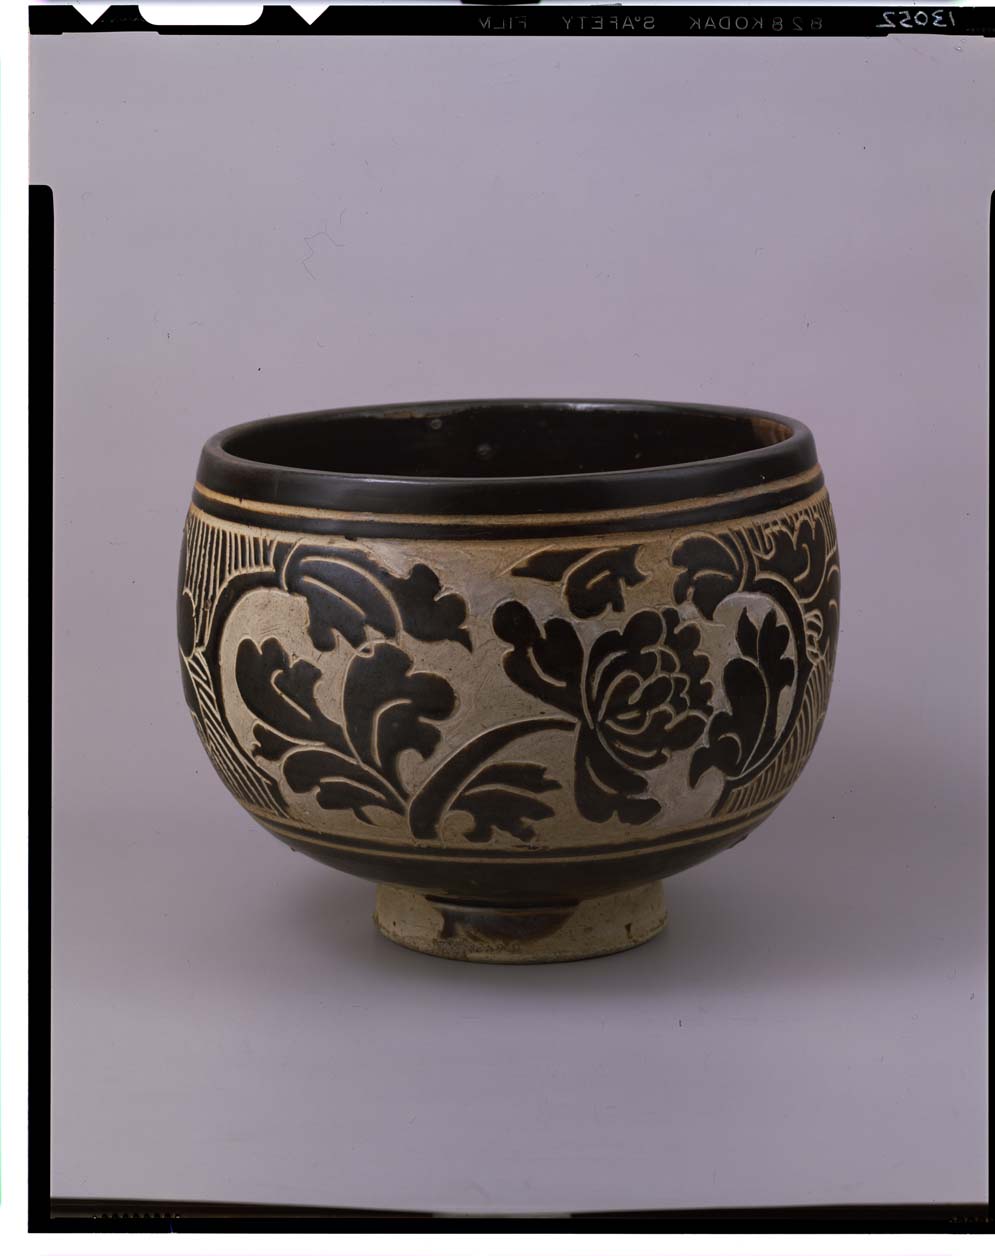 C0013052 黒釉刻花牡丹文鉢 - 東京国立博物館 画像検索